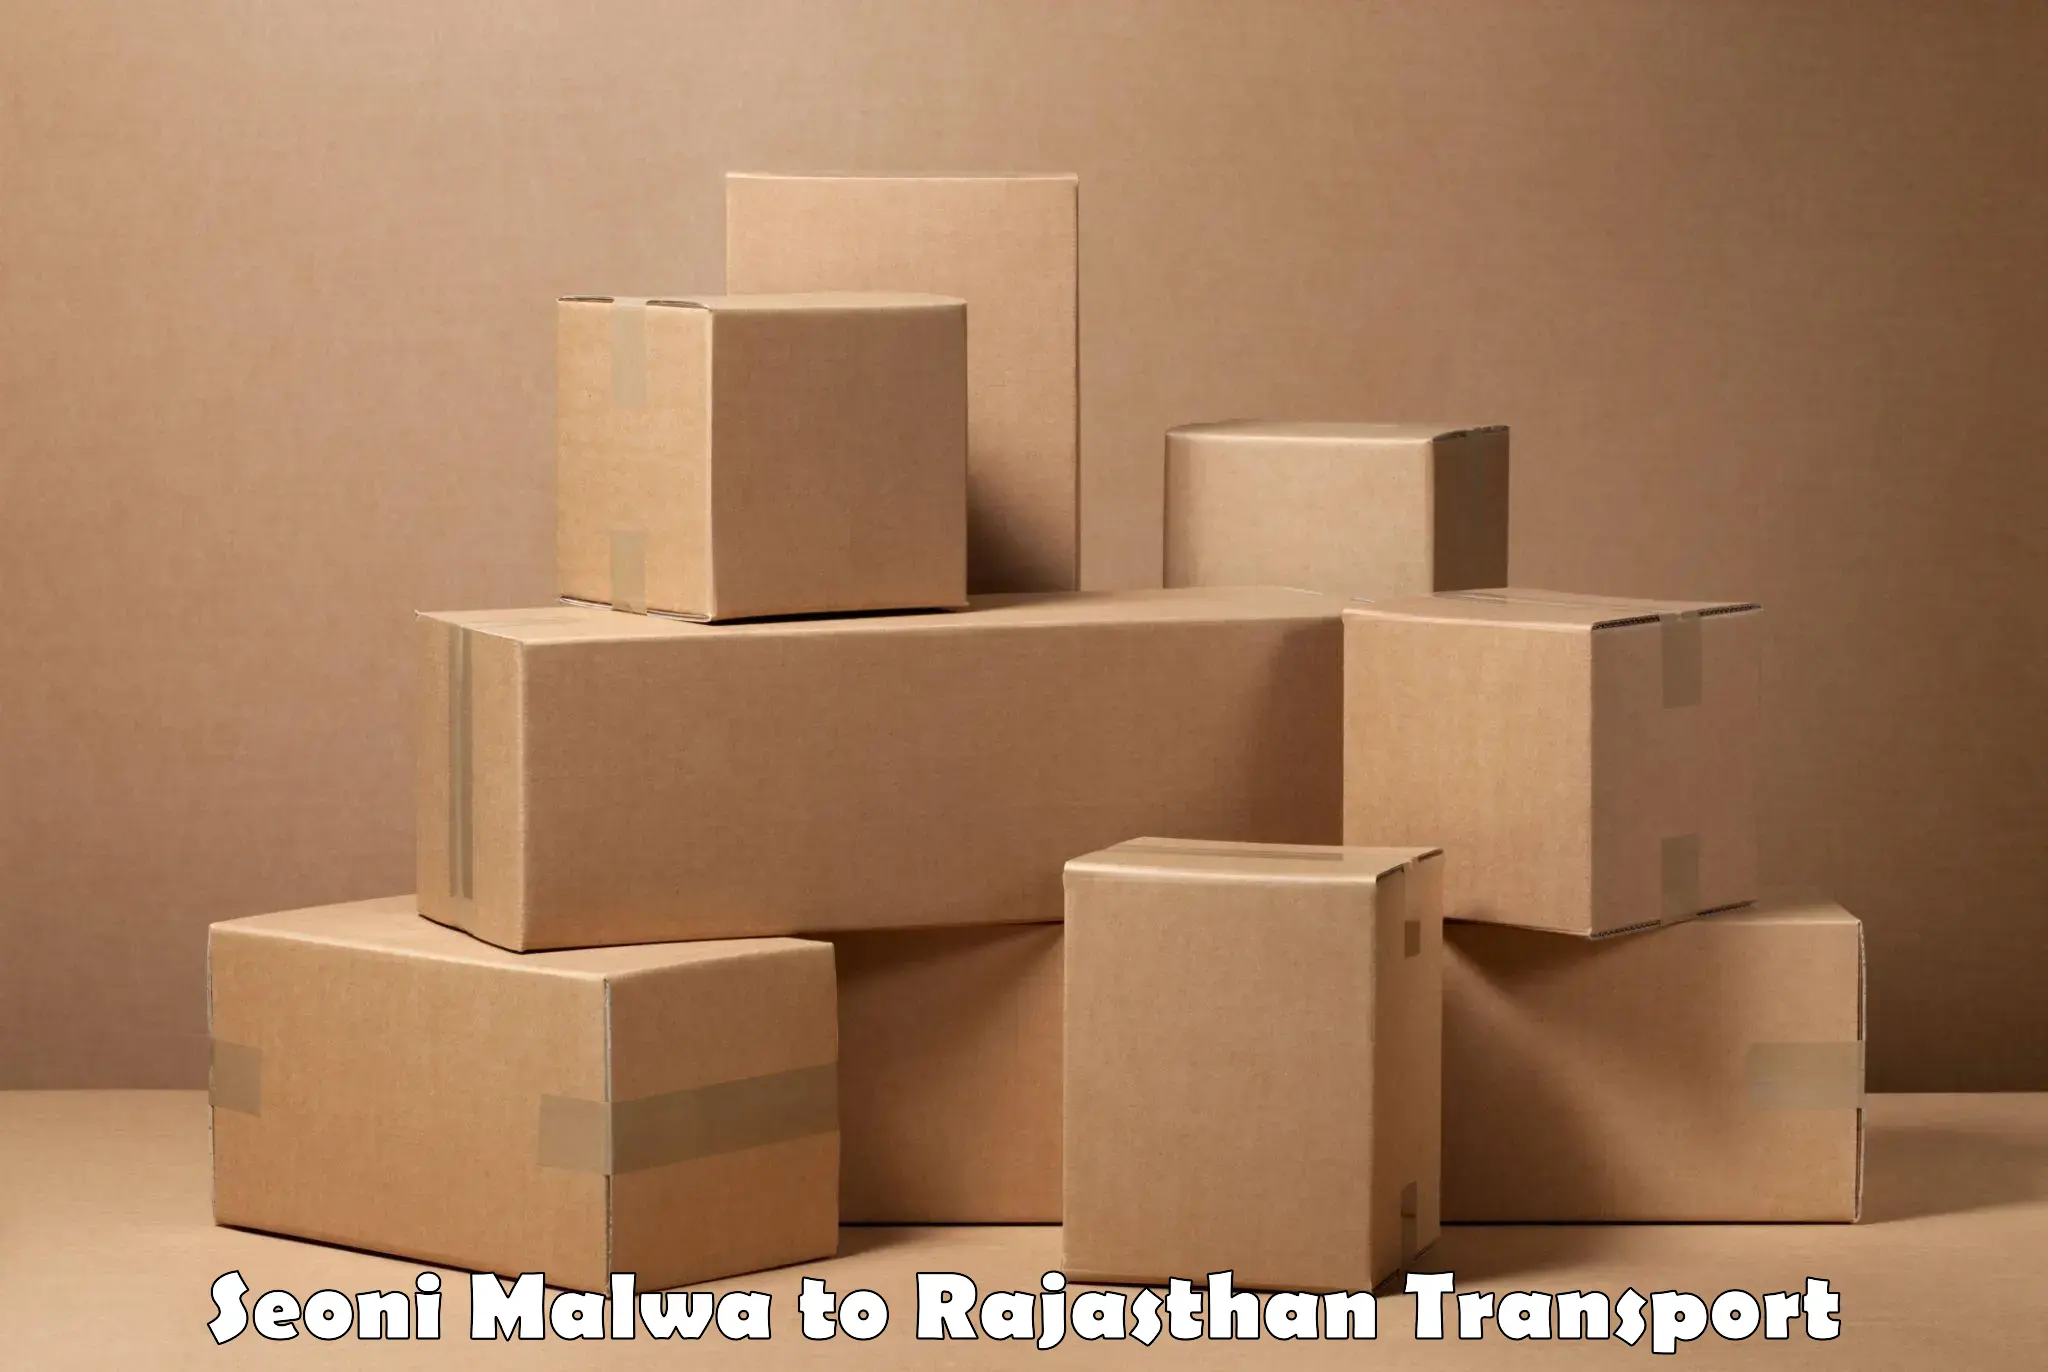 Nearest transport service Seoni Malwa to Makrana